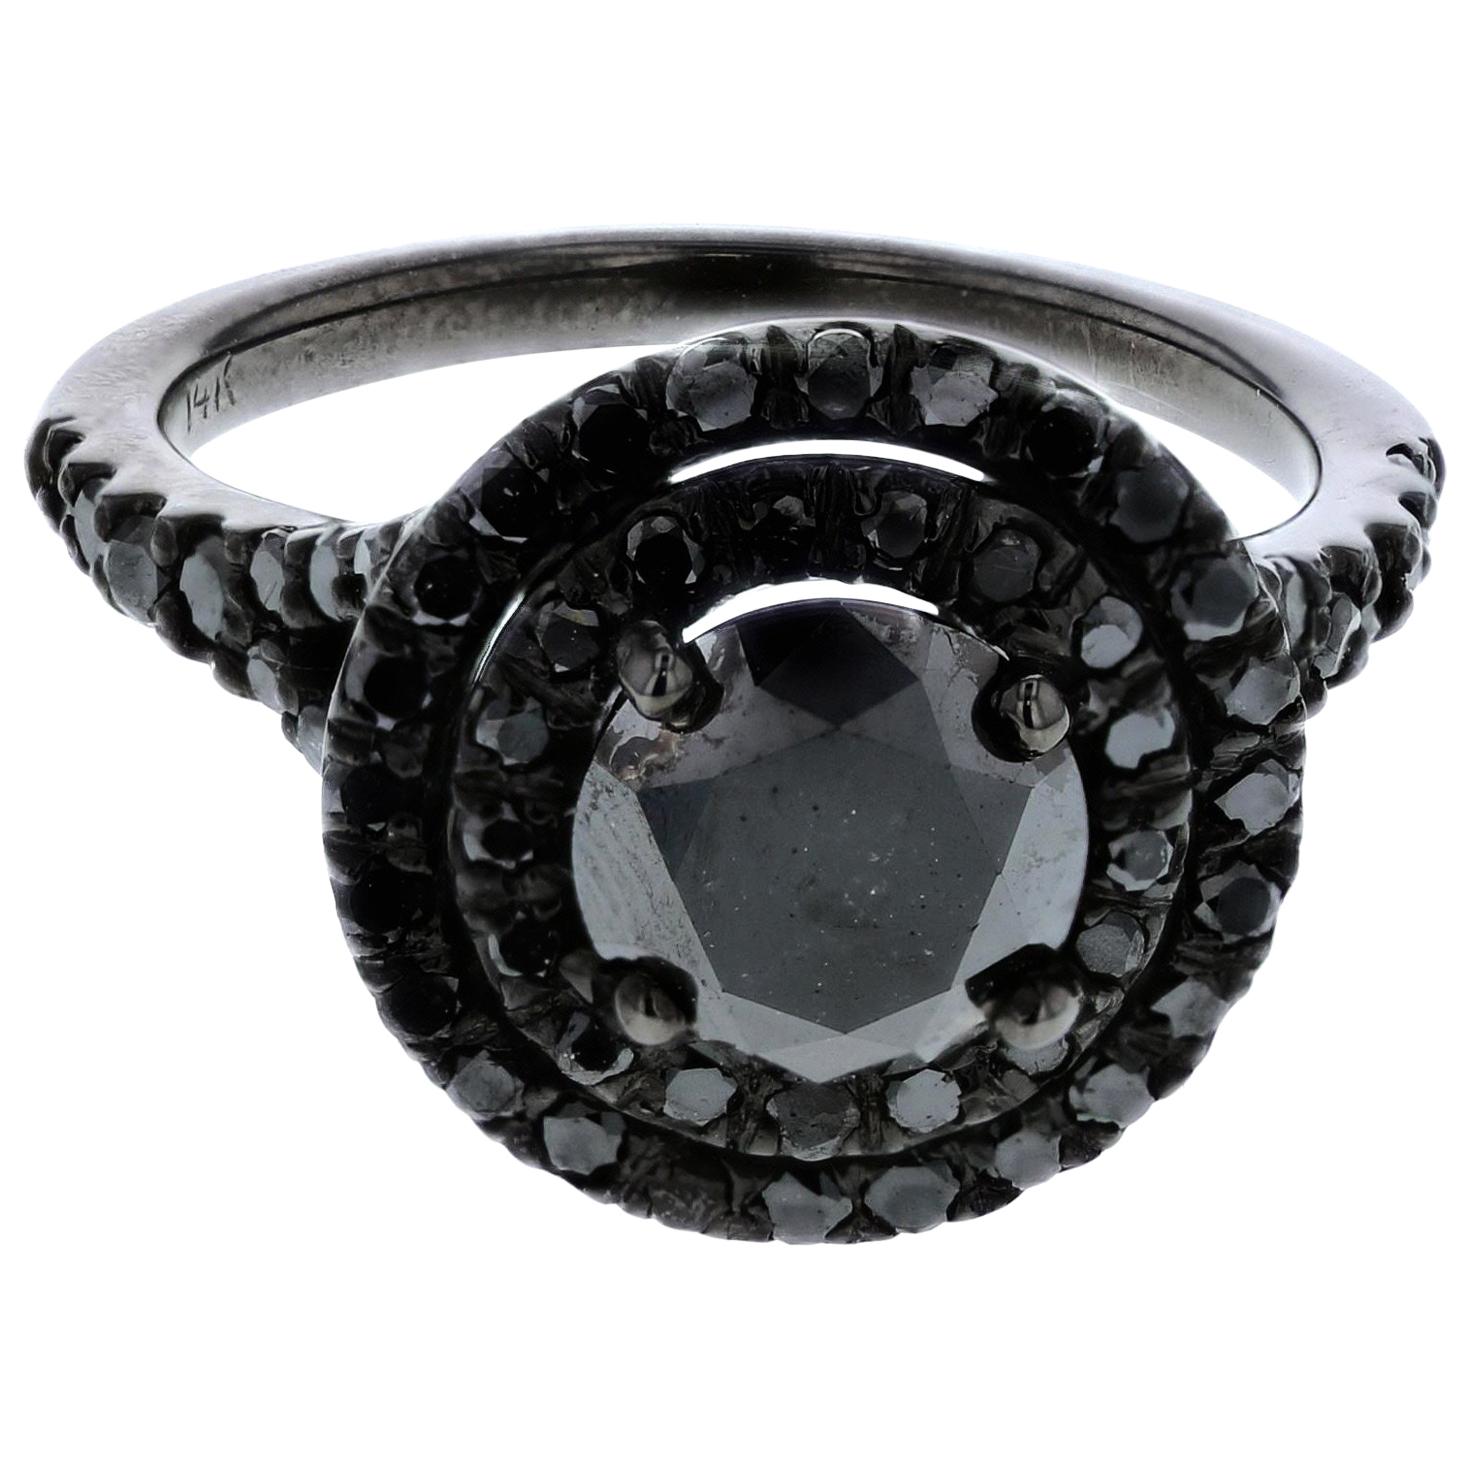 1.10 Carat Black Diamond Double Halo Ring with Black Diamond Halo